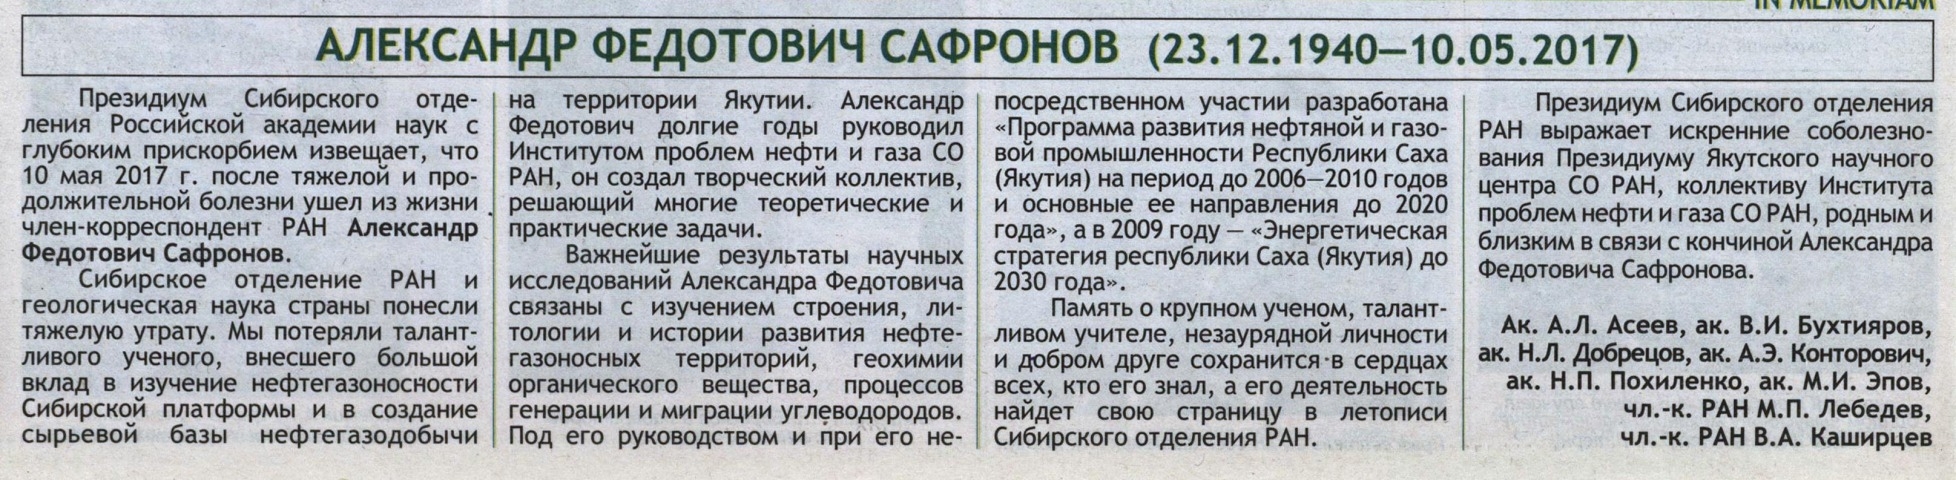 Обложка электронного документа Александр Федотович Сафронов (23.12.1940 - 10.05.2017)